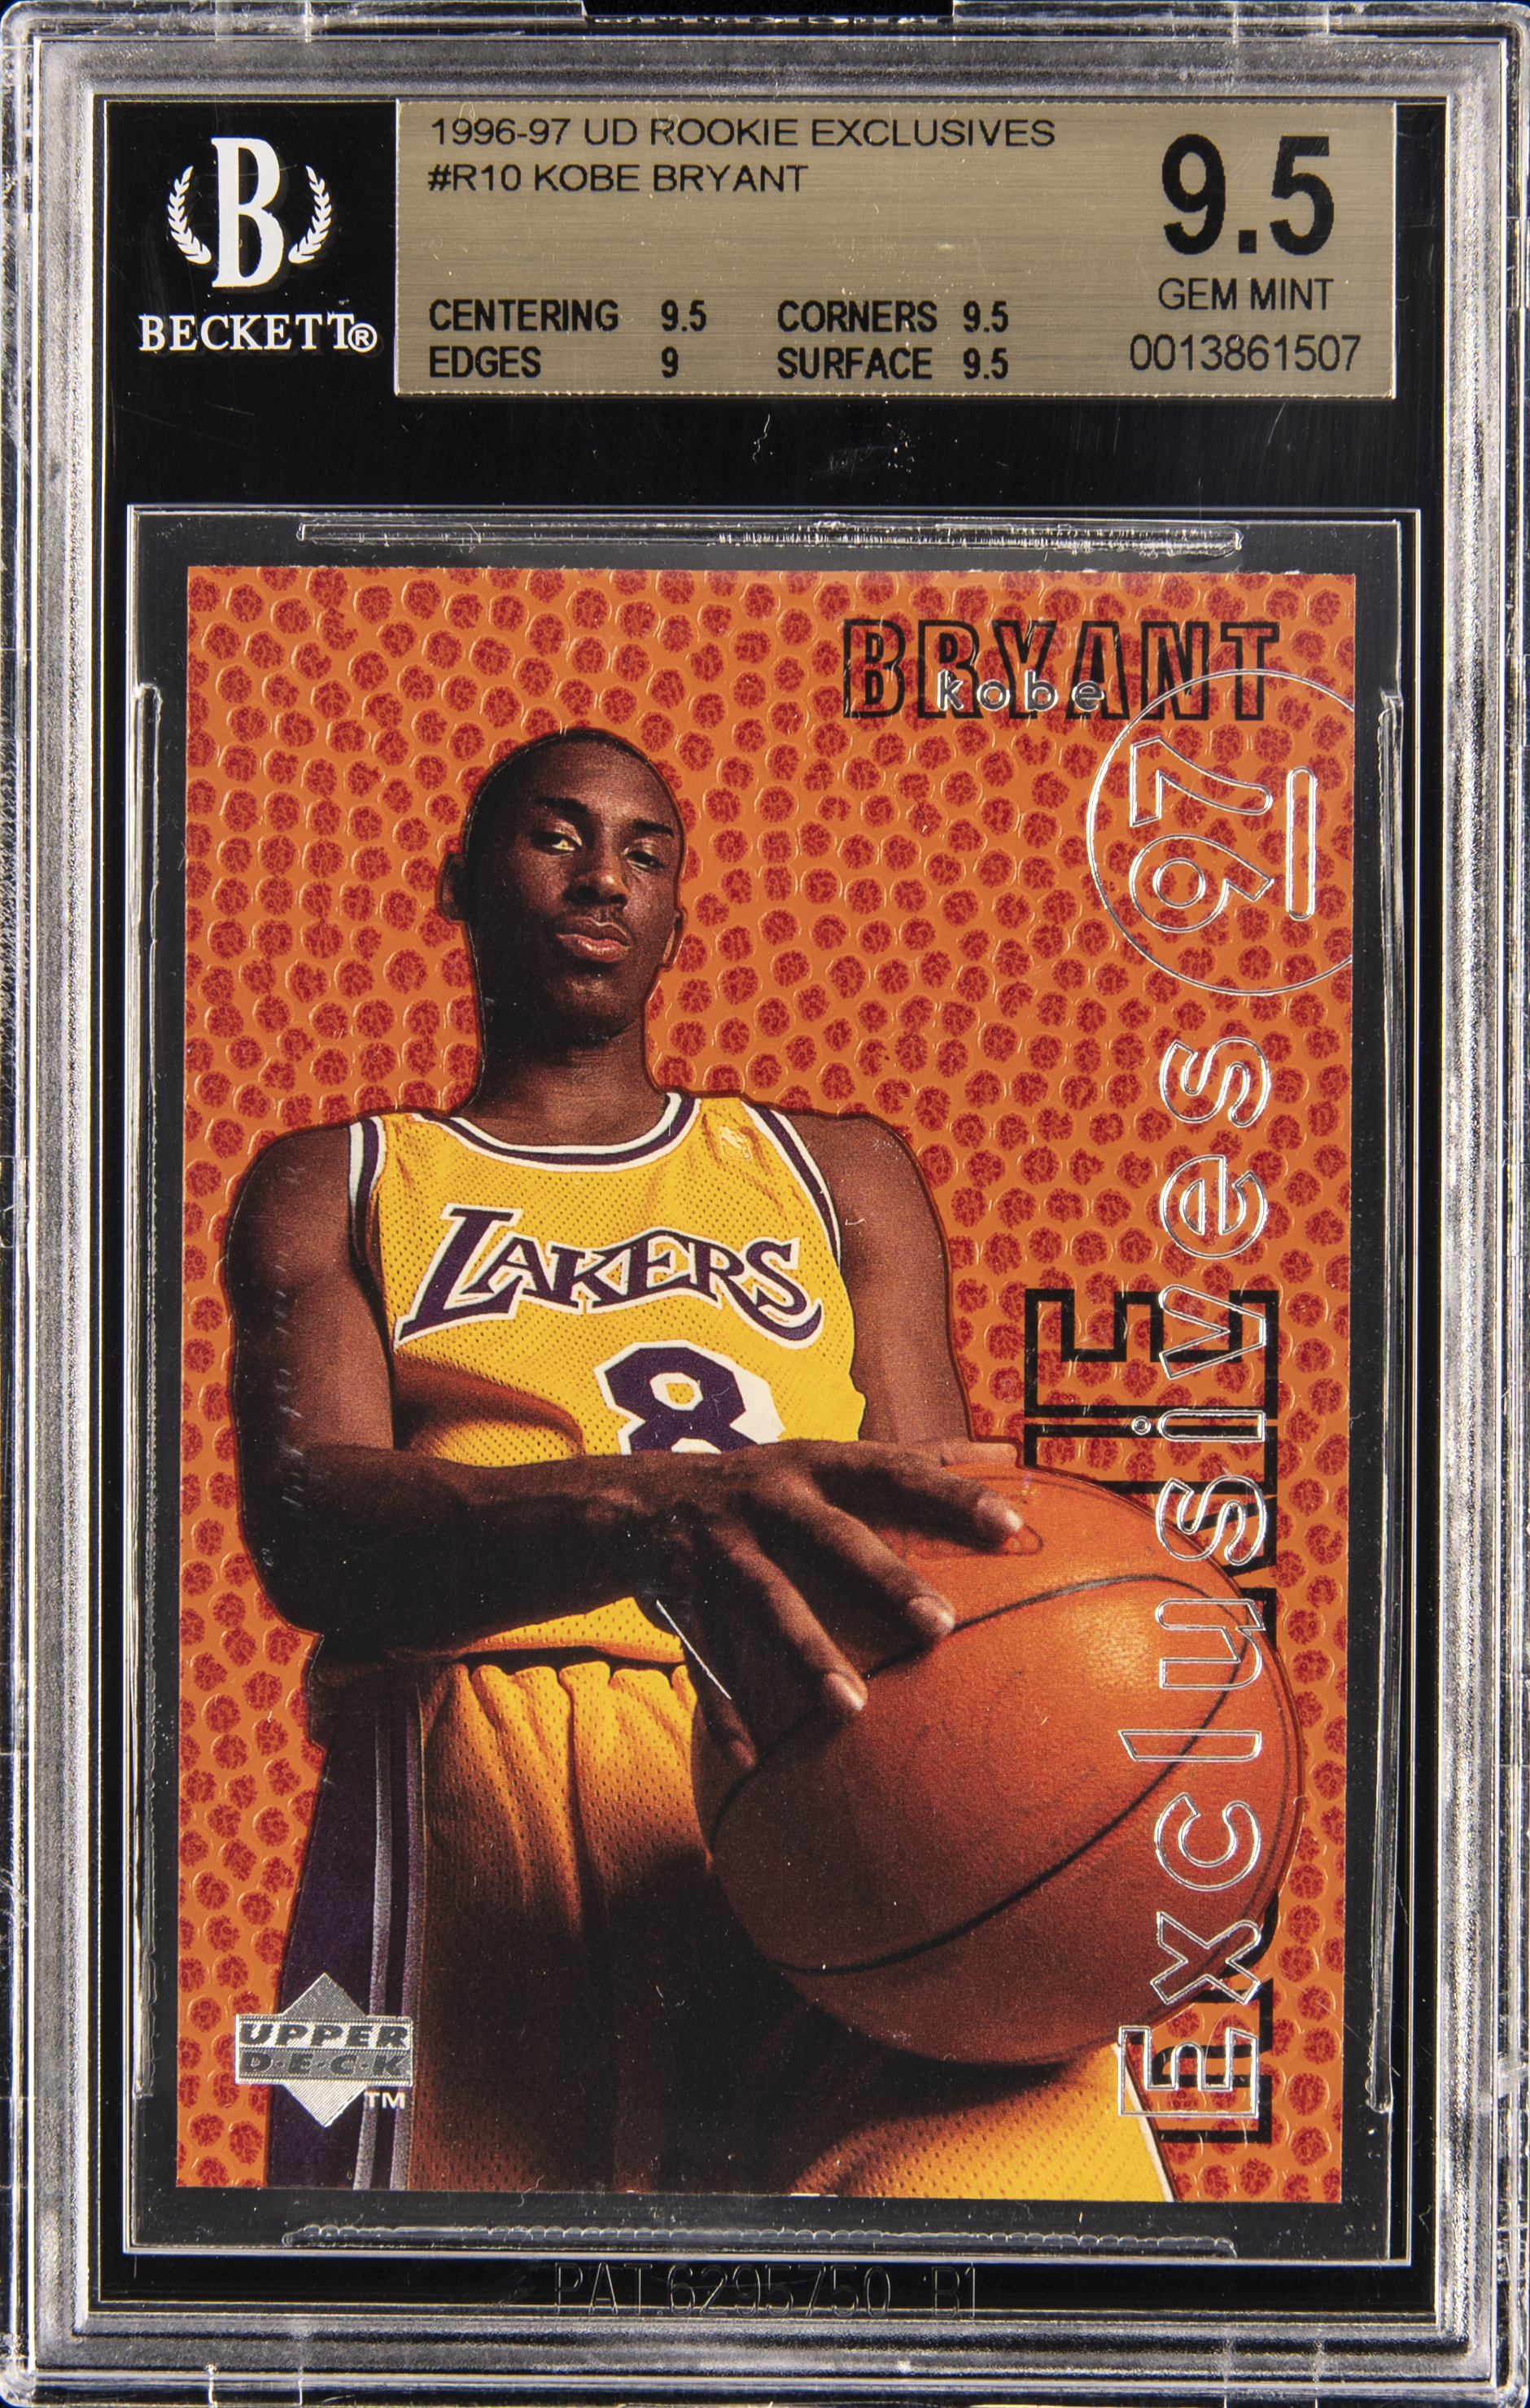 1996-97 Upper Deck Rookie Exclusives #R10 Kobe Bryant Rookie Card – BGS GEM MINT 9.5